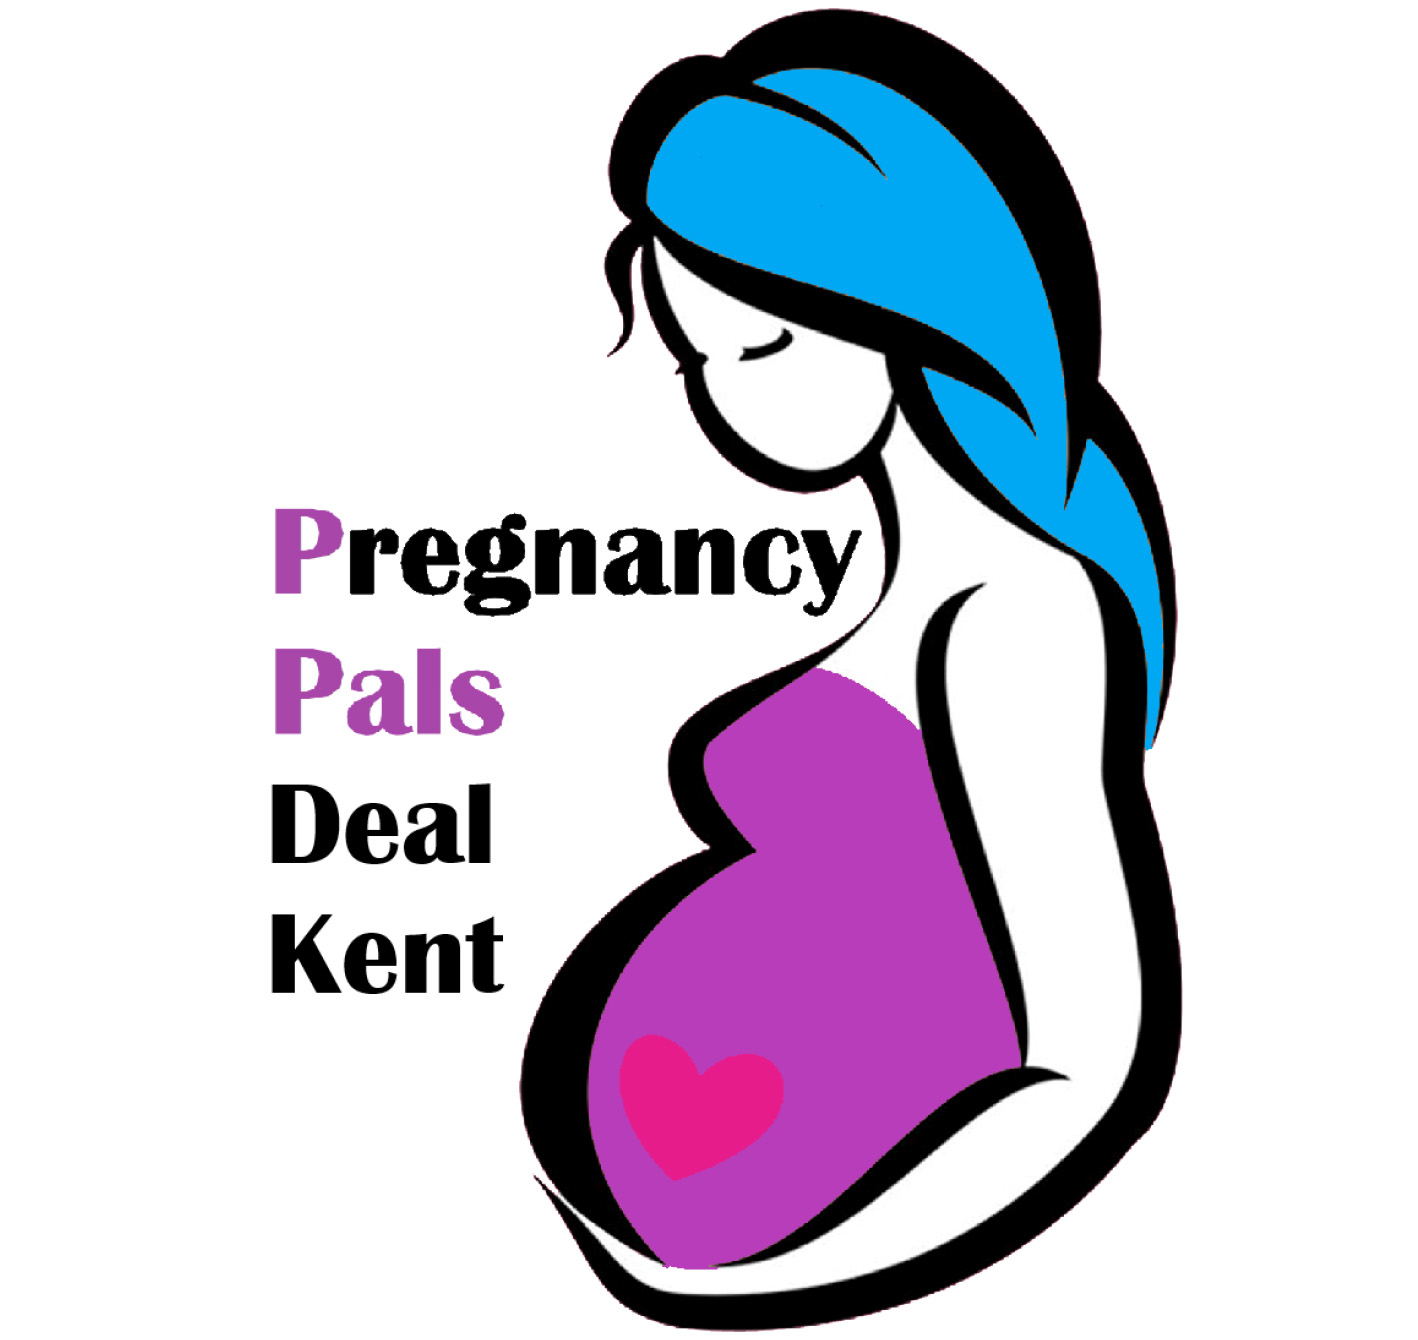 Pregnancy Pals